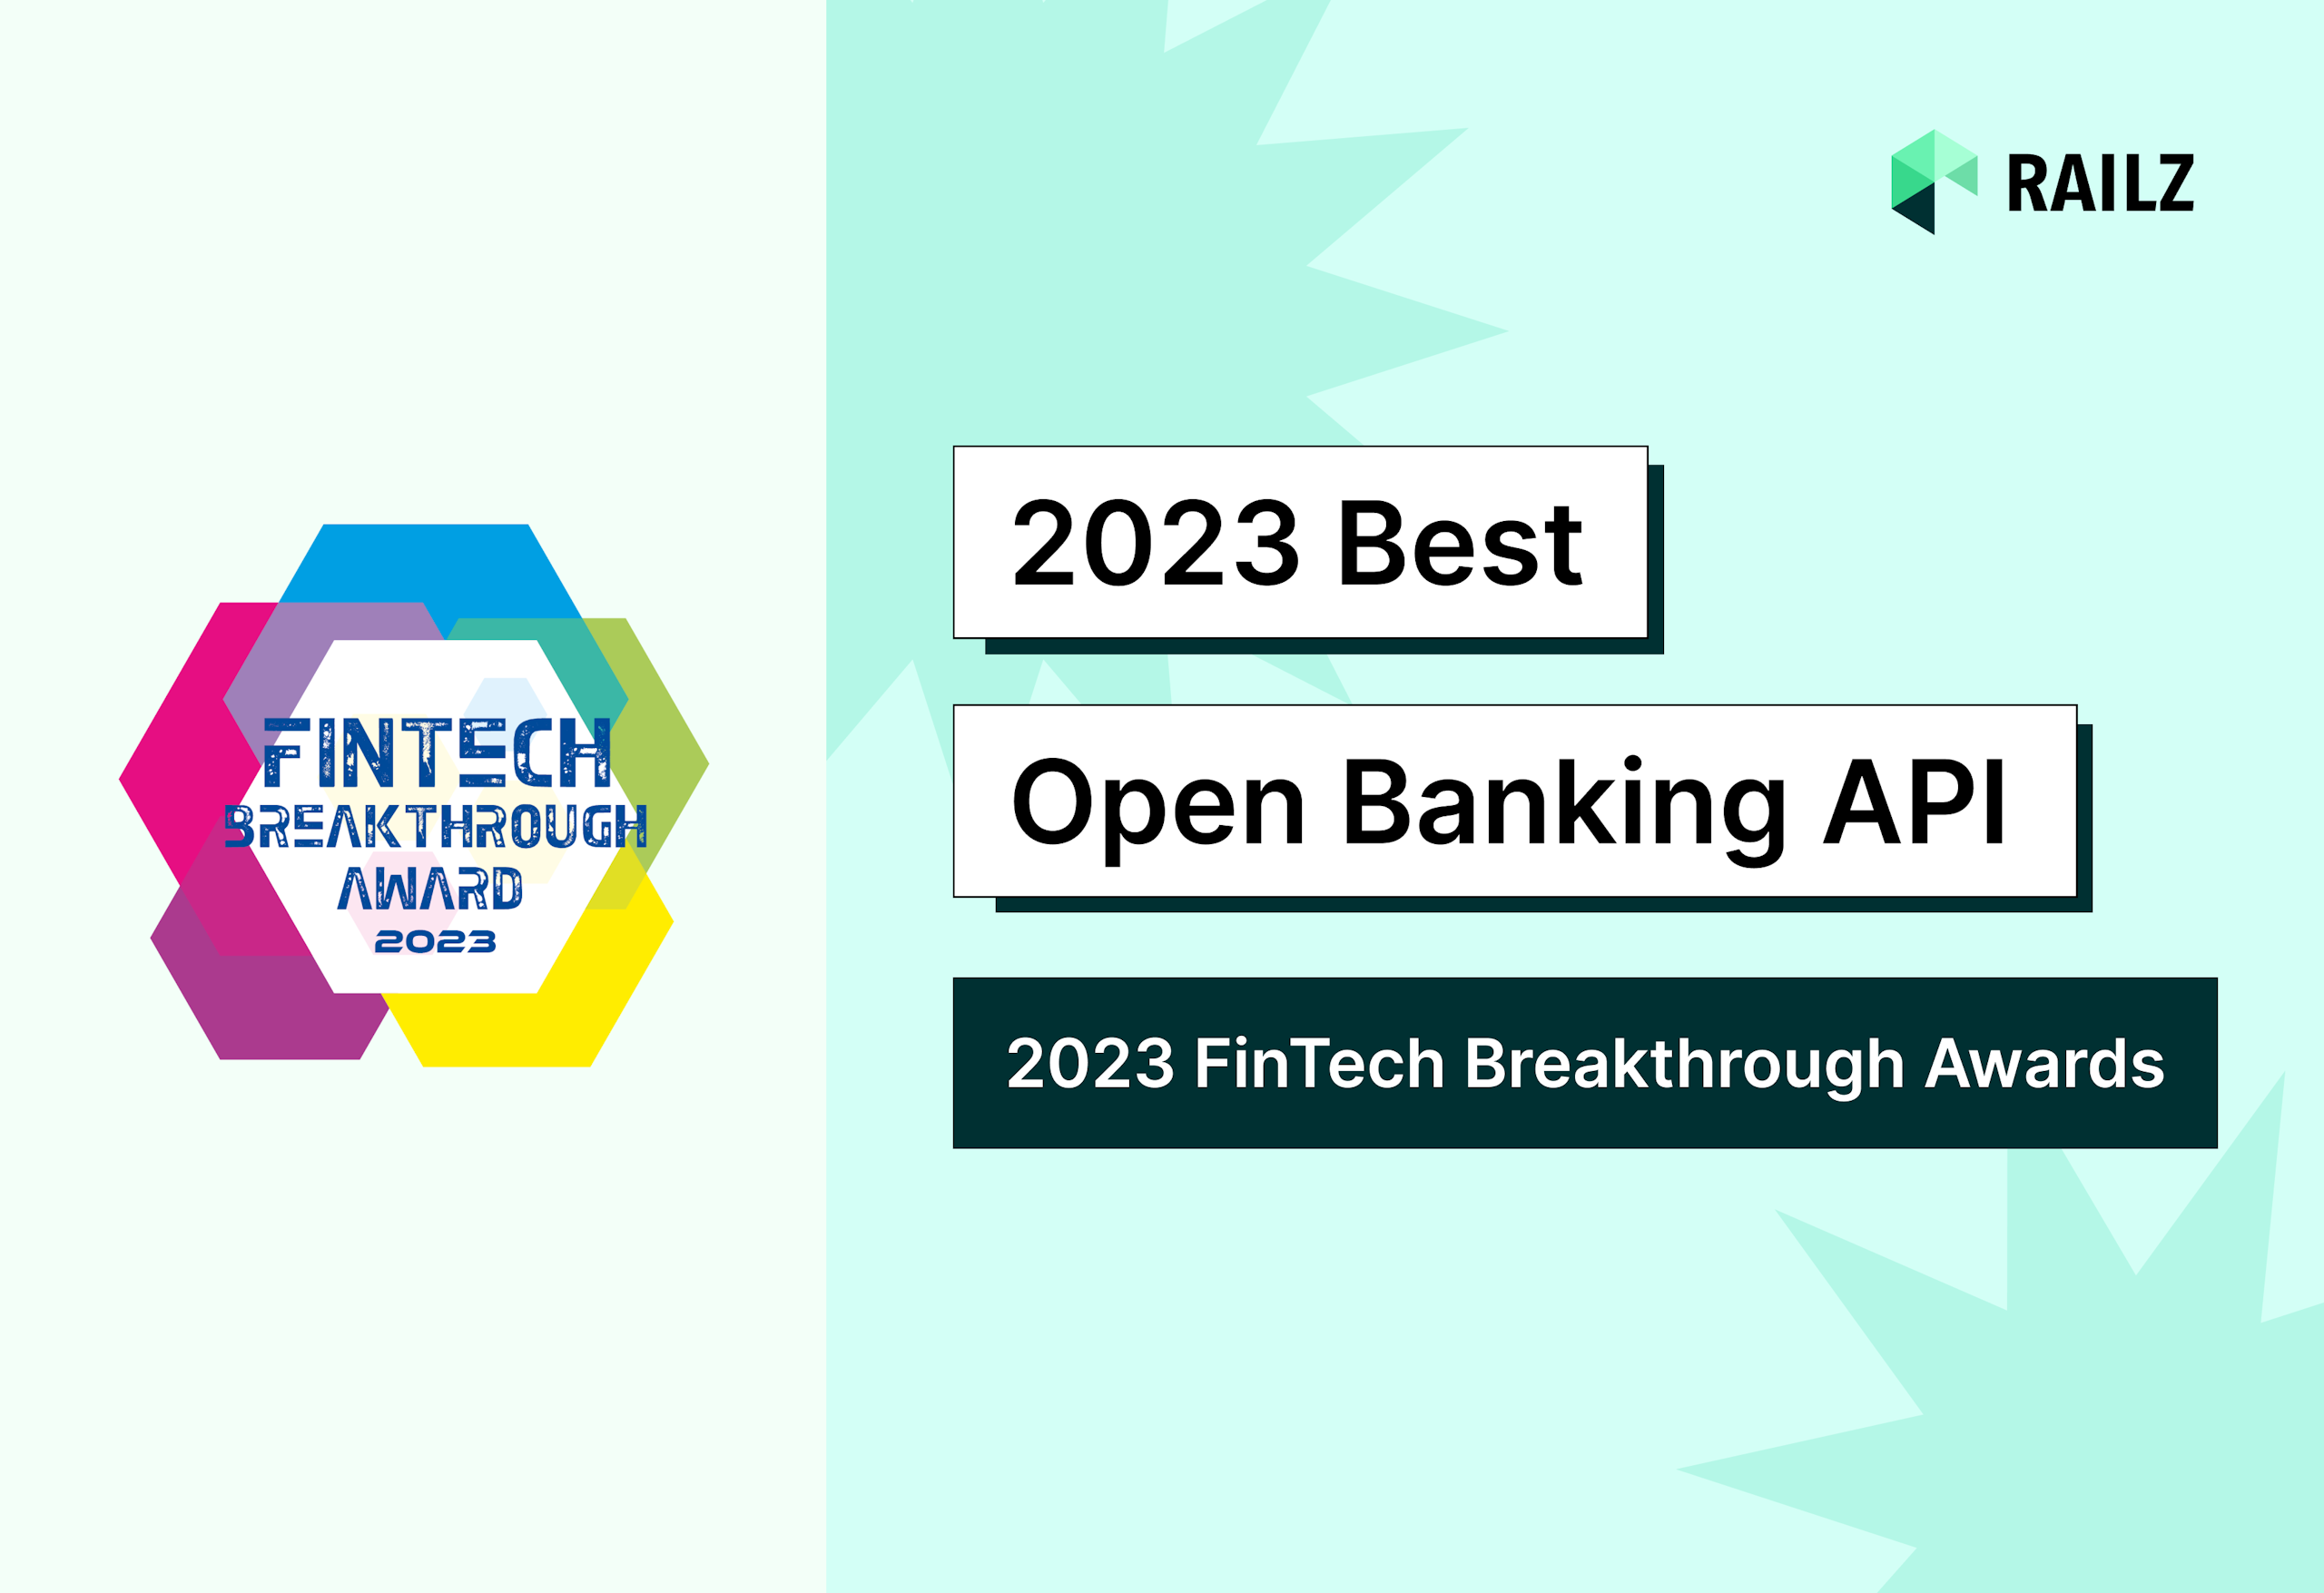 Railz Wins "Best Open Banking API" at 2023 FinTech Breakthrough Awards